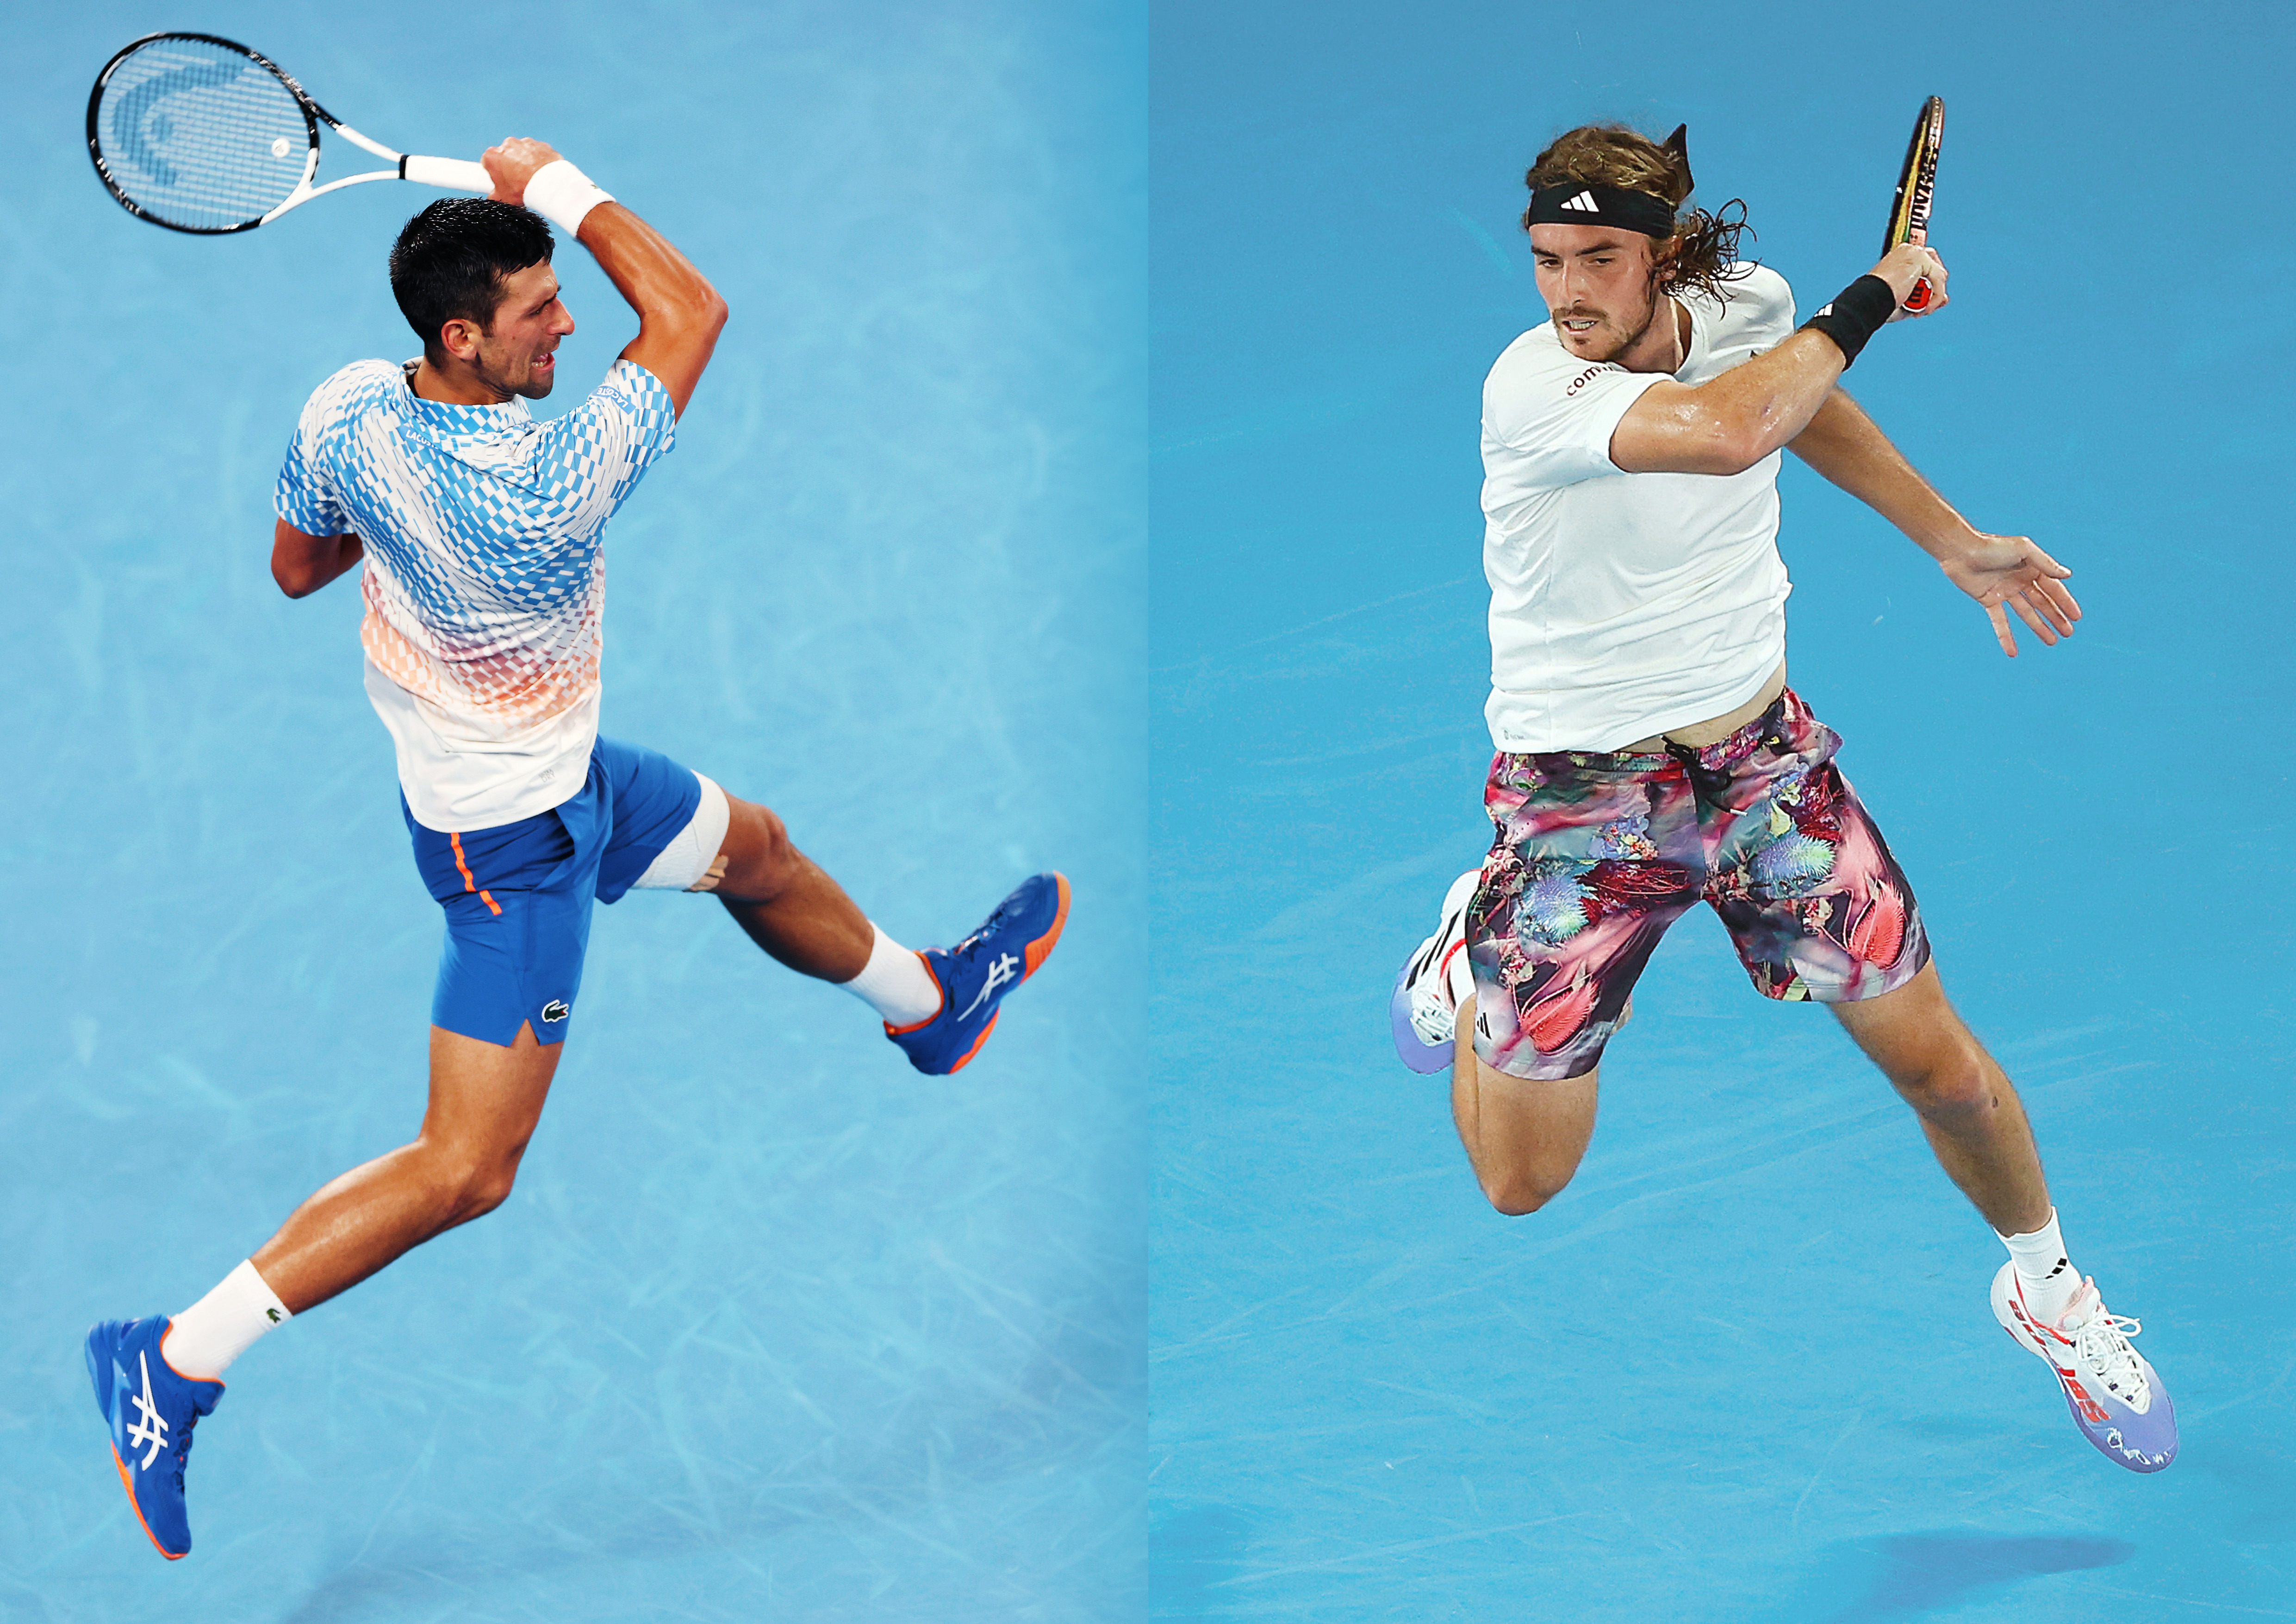 Australian Open 2023 What time is the mens singles final and how to watch Novak Djokovic vs Stefanos Tsitsipas tonight